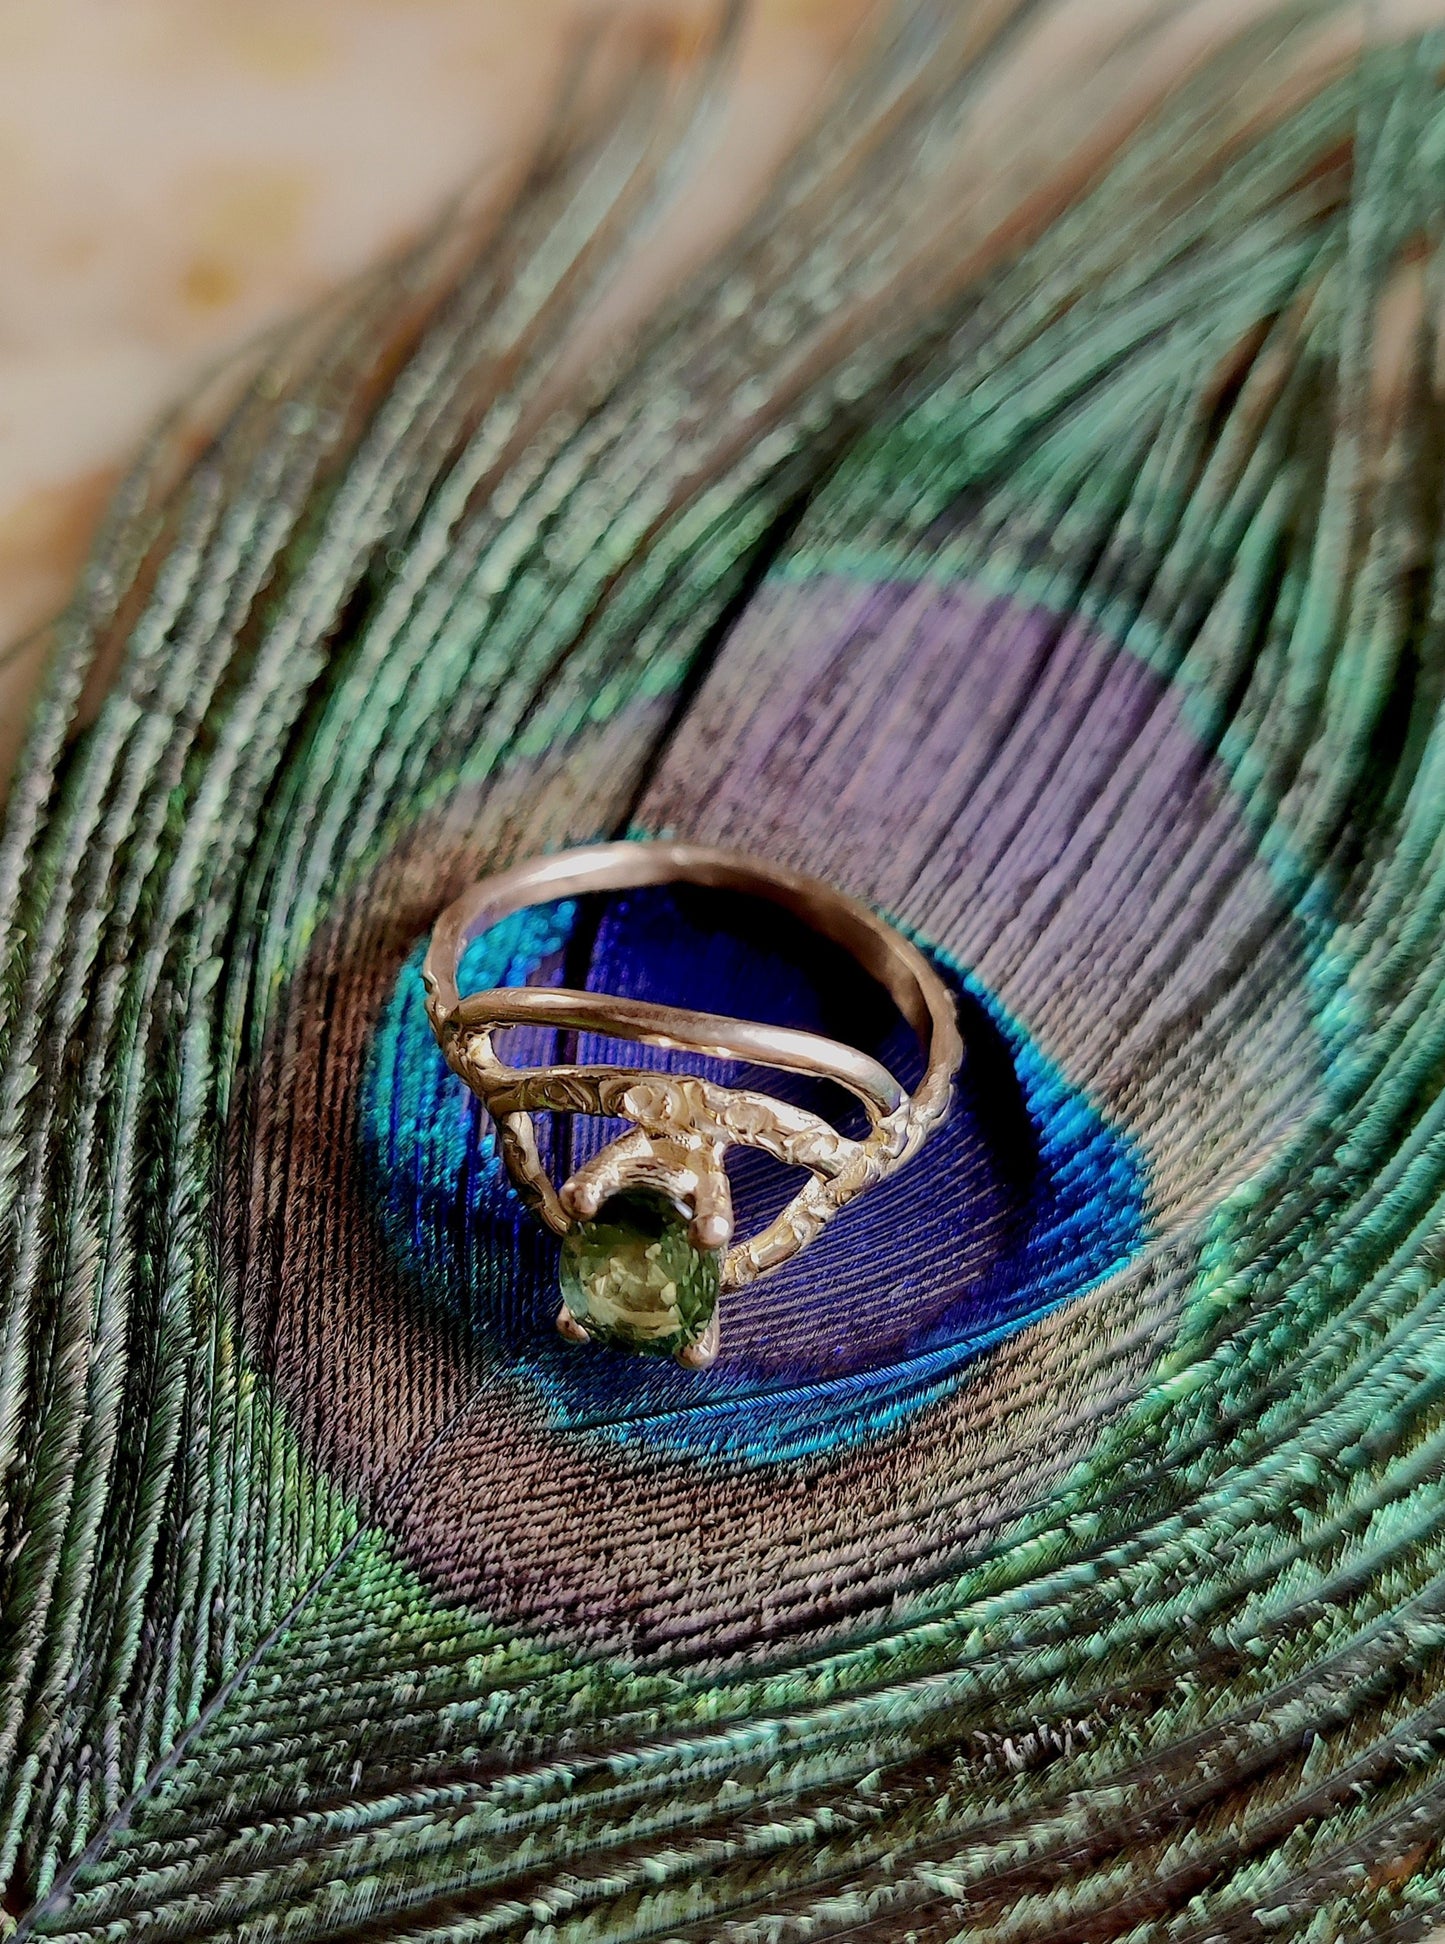 Ring in 18k geel goud met groene saffier: Horus.